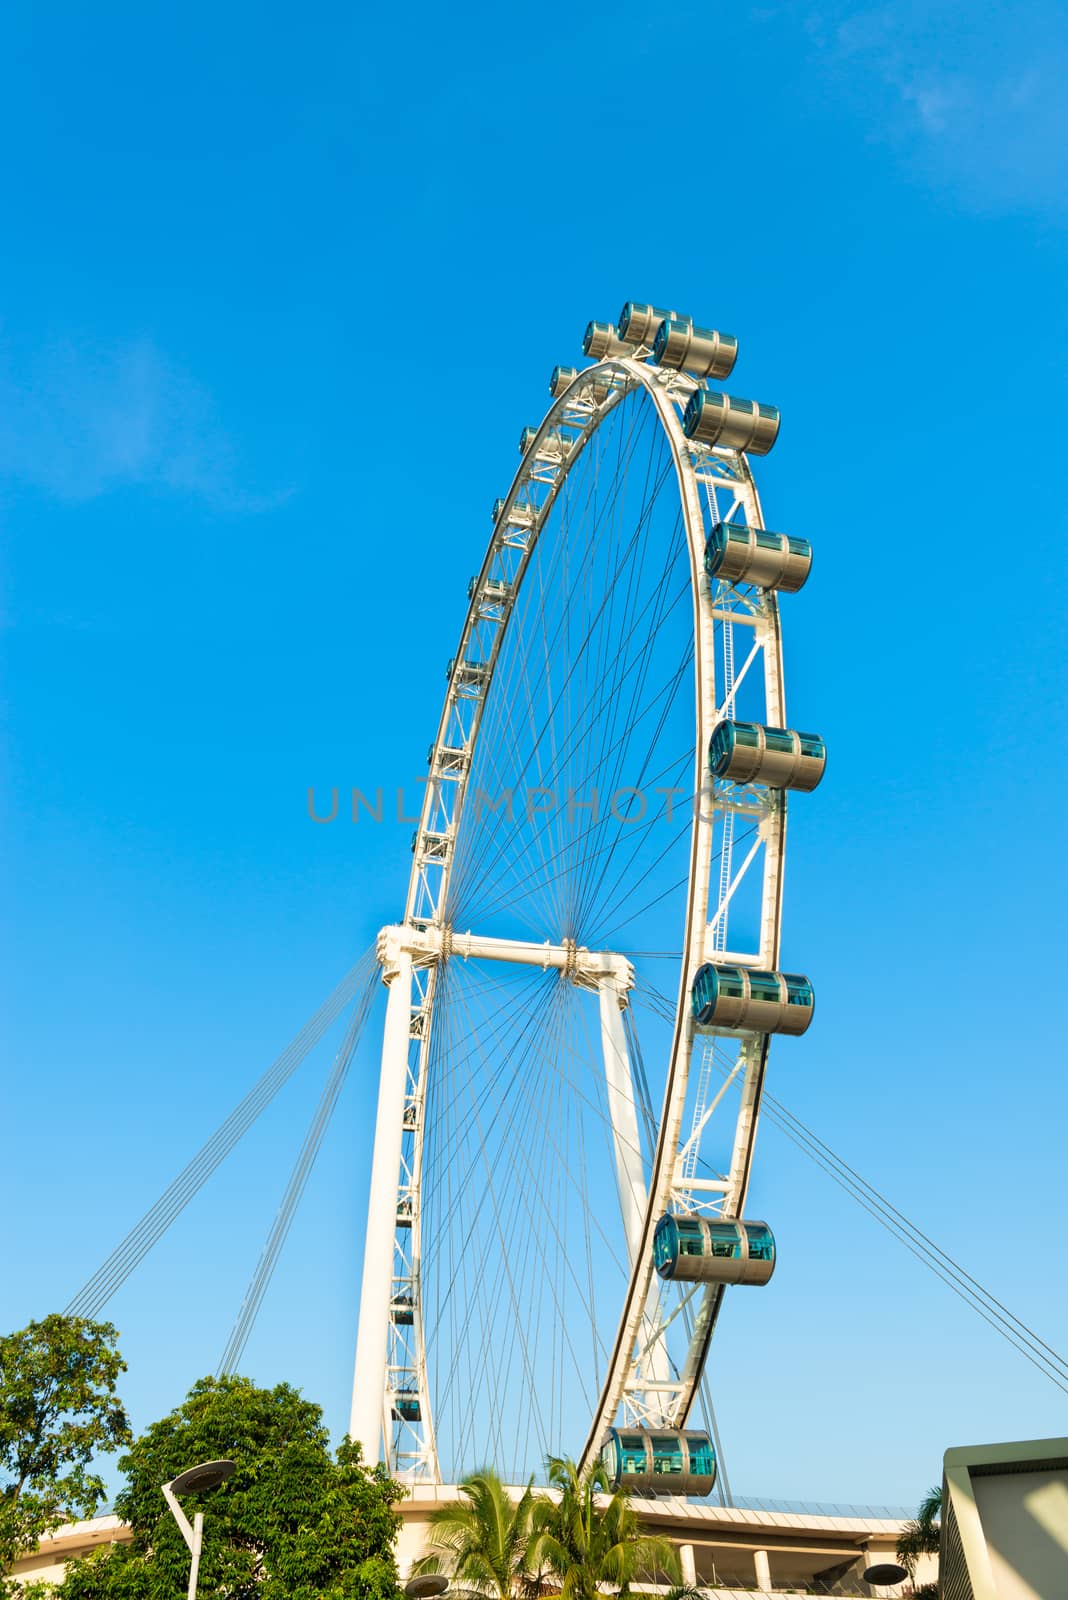 Big ferris wheel with cabins on blue sky